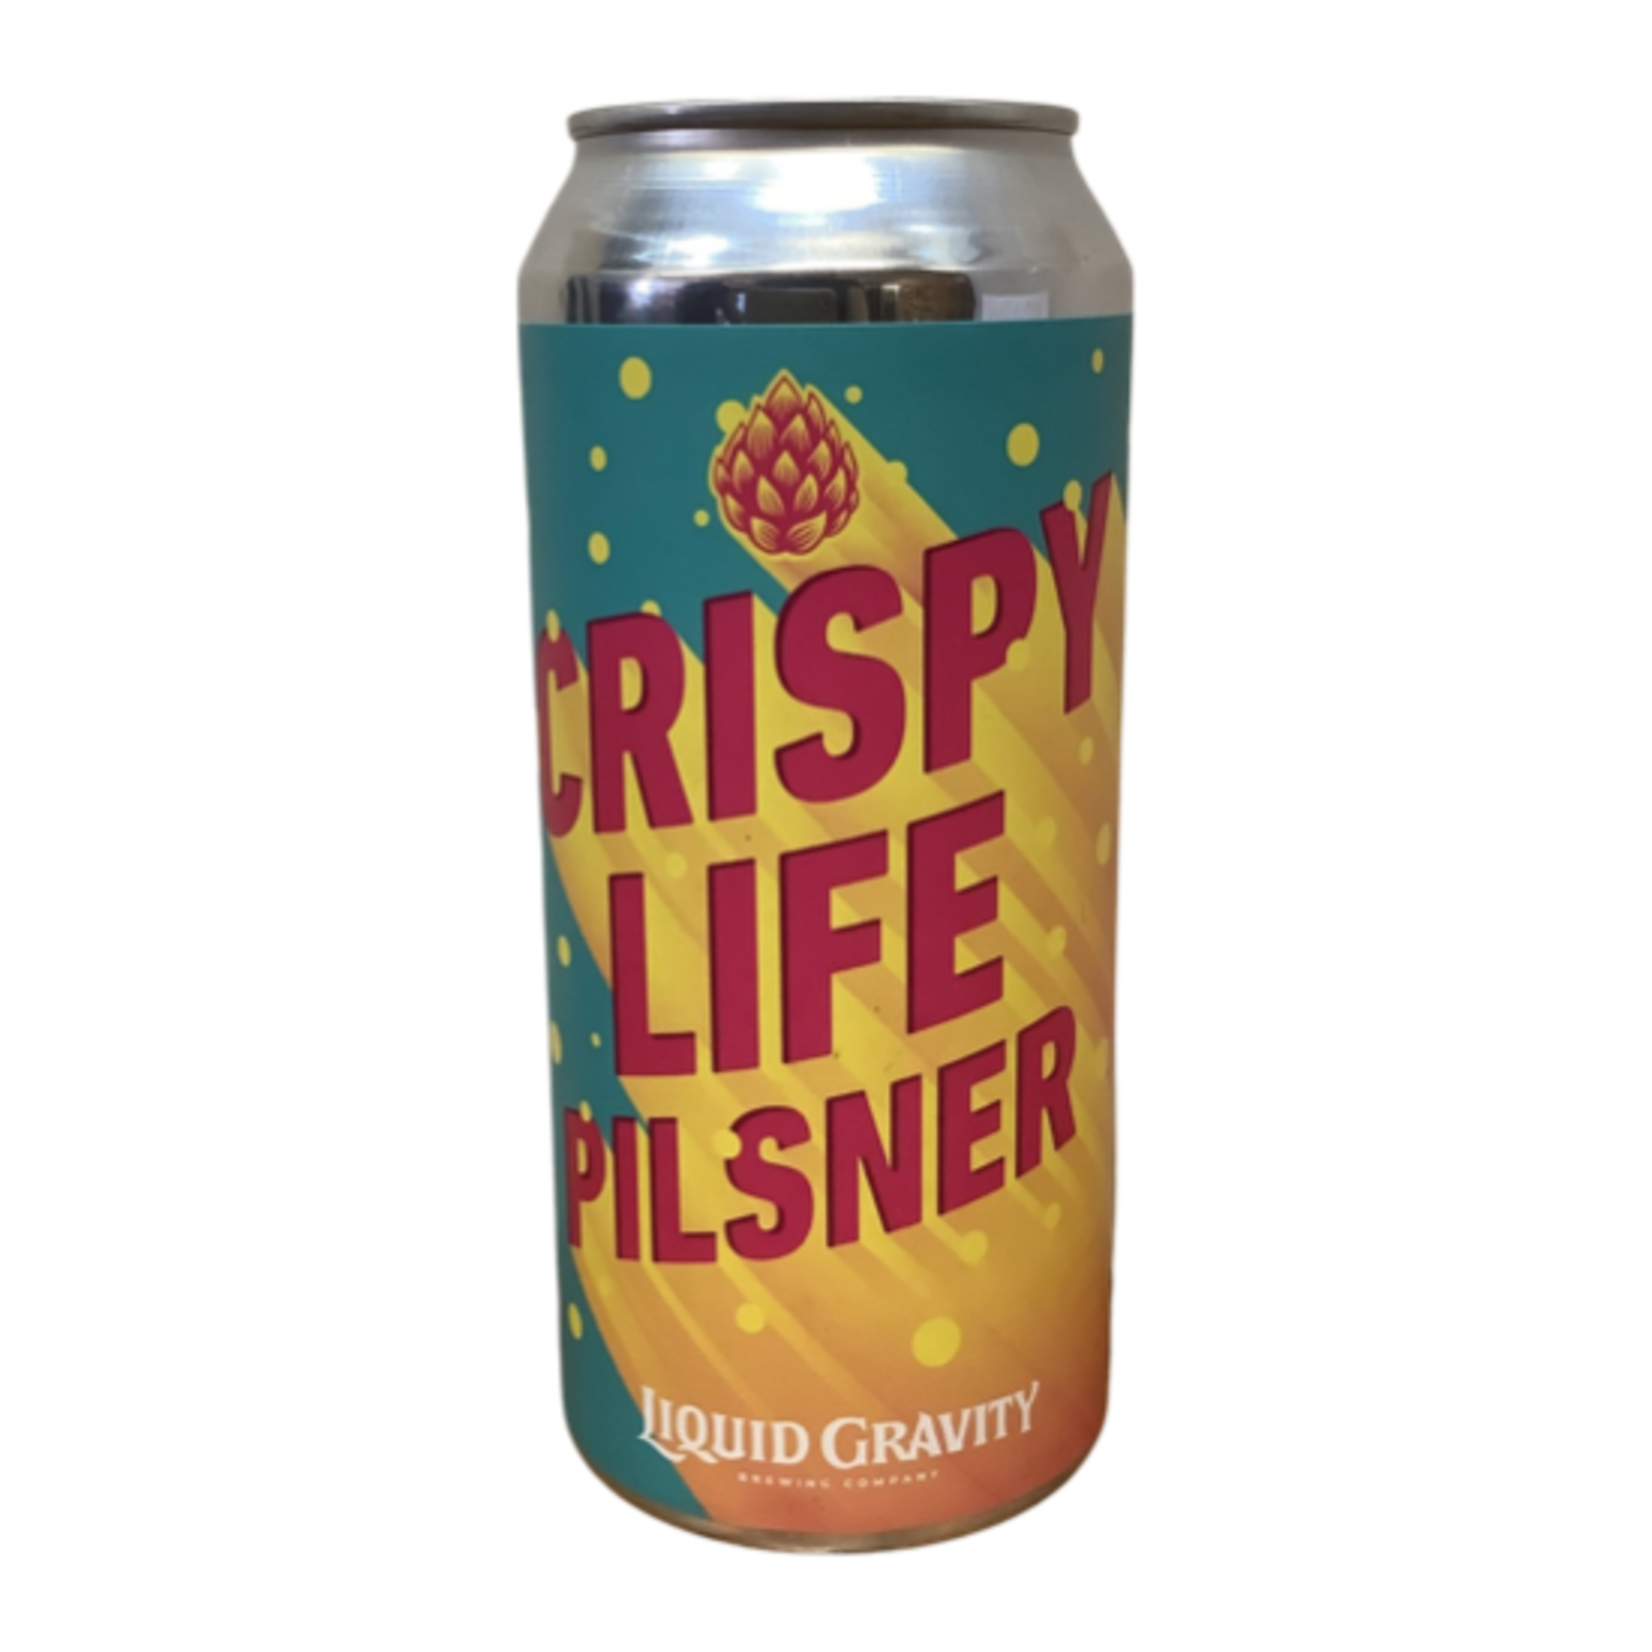 Liquid Gravity "Crispy Life" Pilsner 16 OZ, San Luis Obispo CA